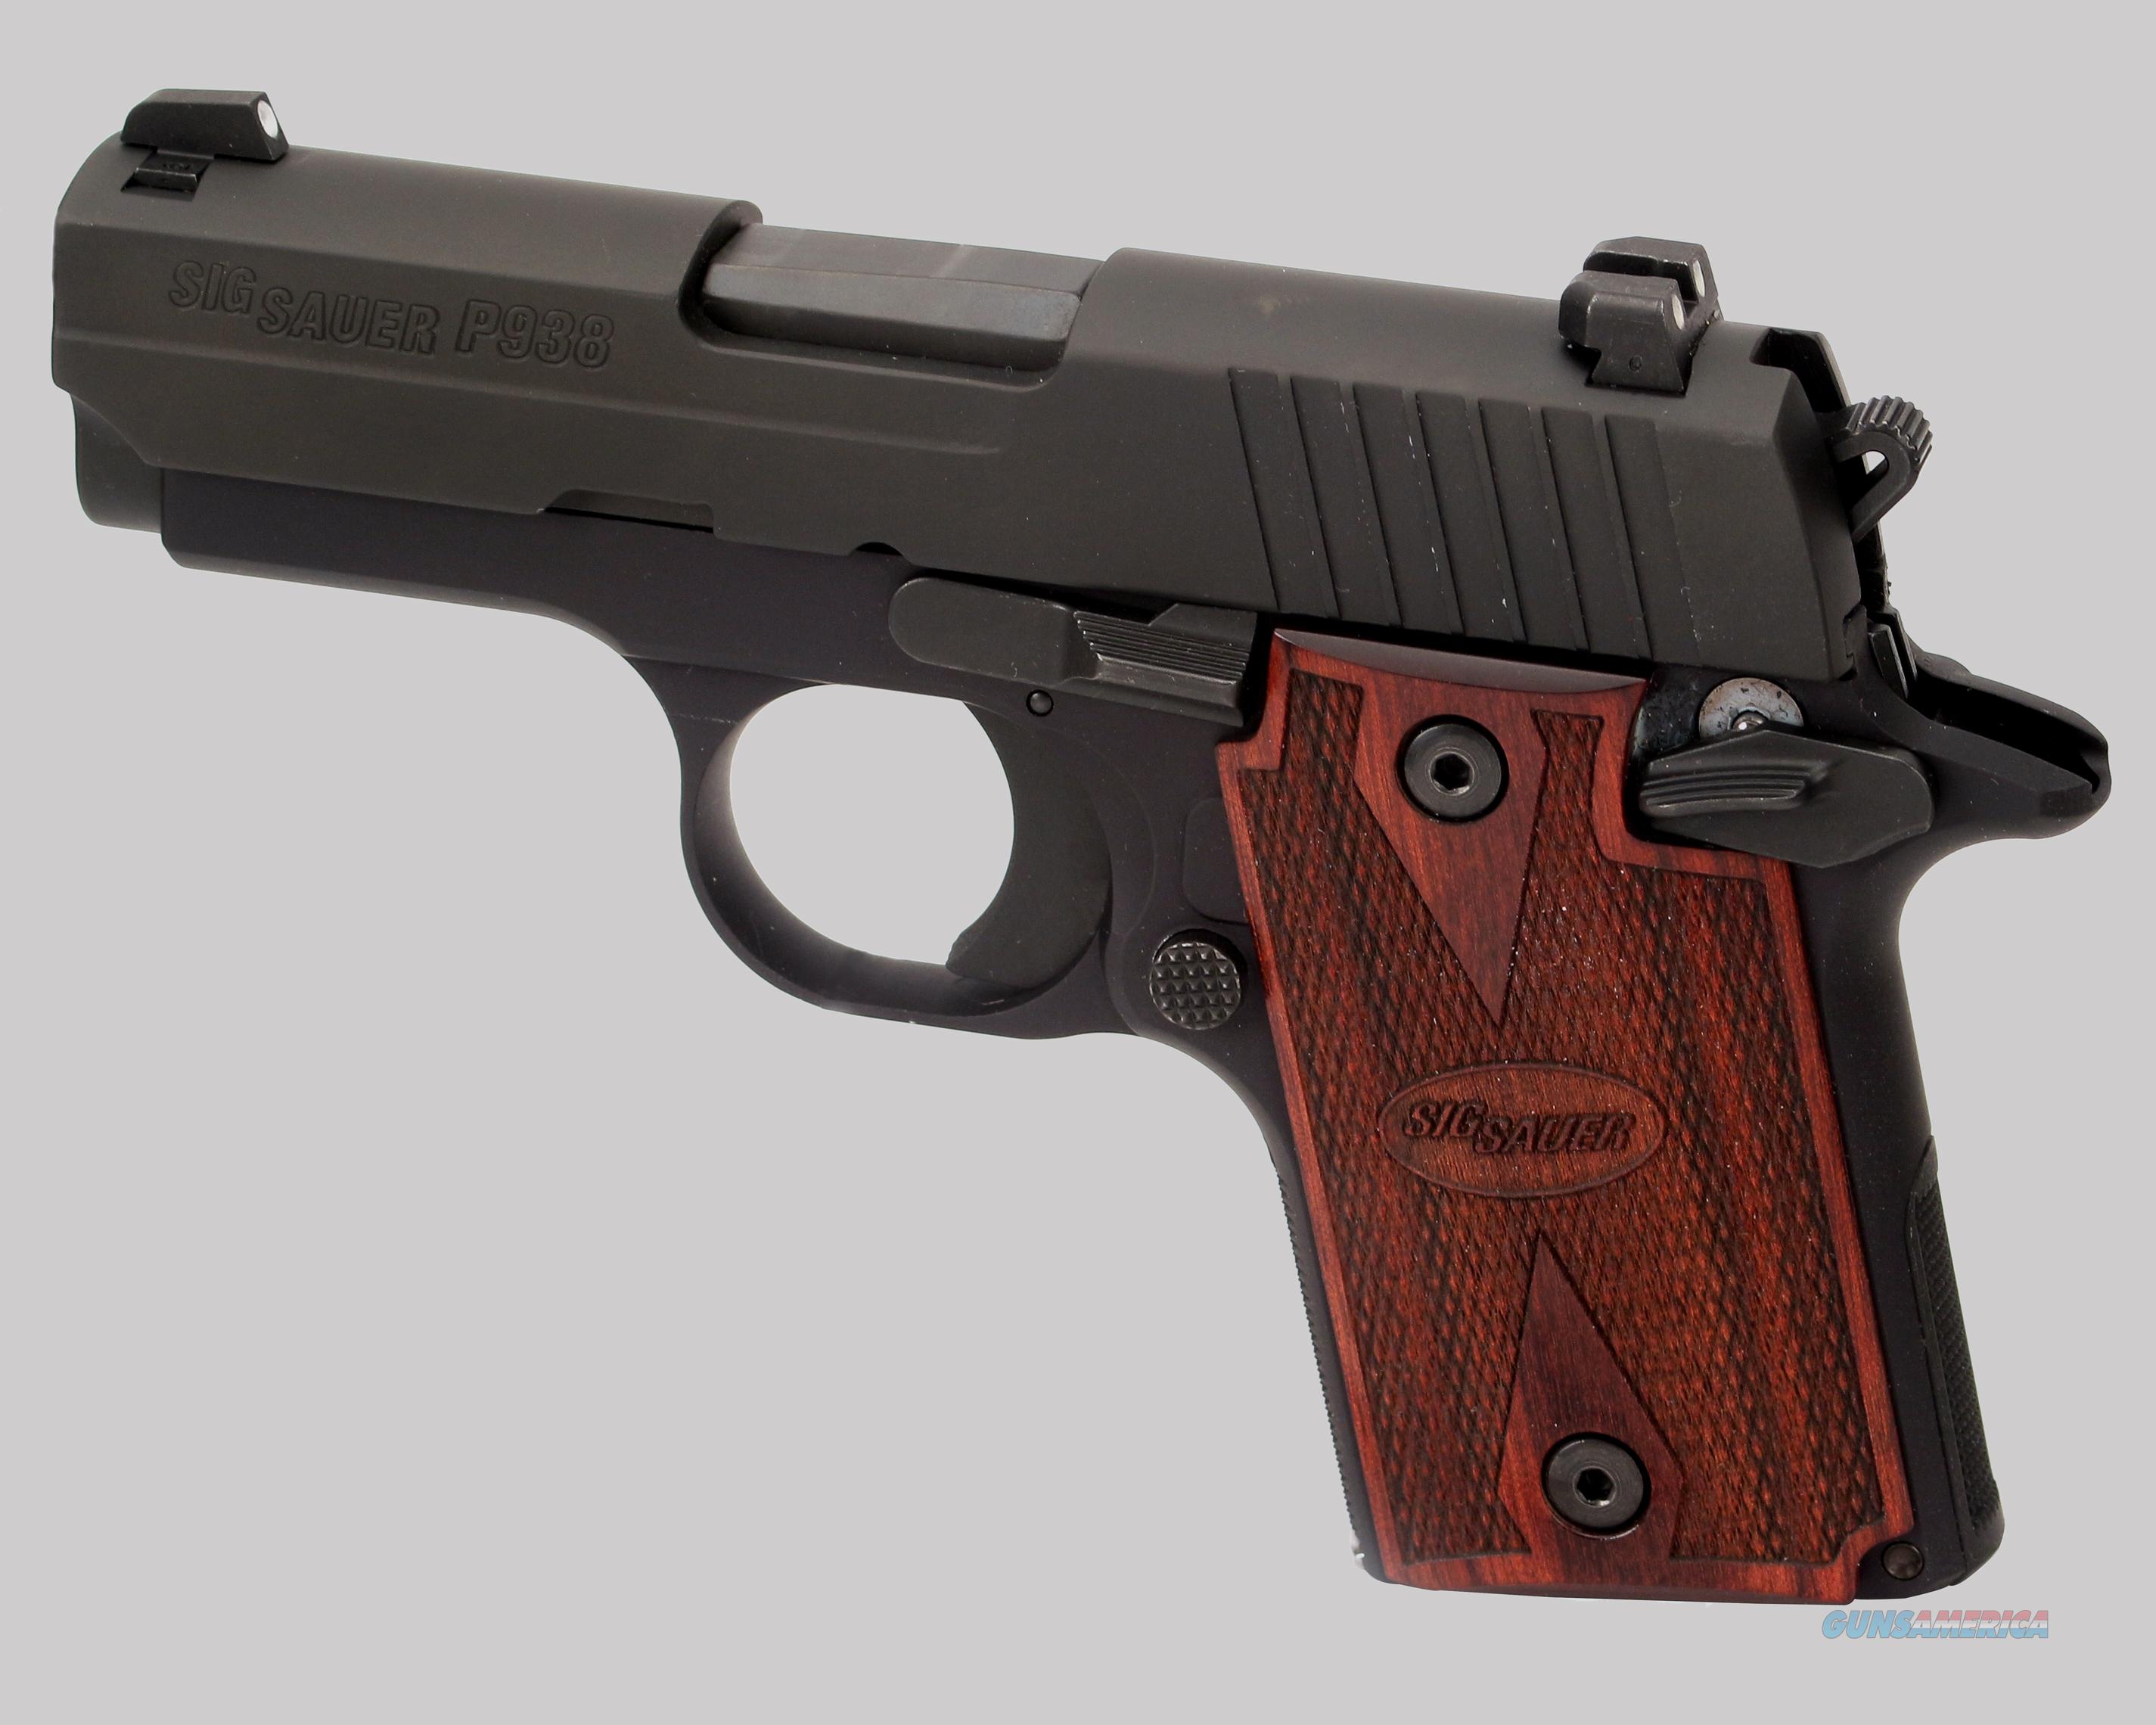  Sig Sauer 9mm  P238 Pistol for sale